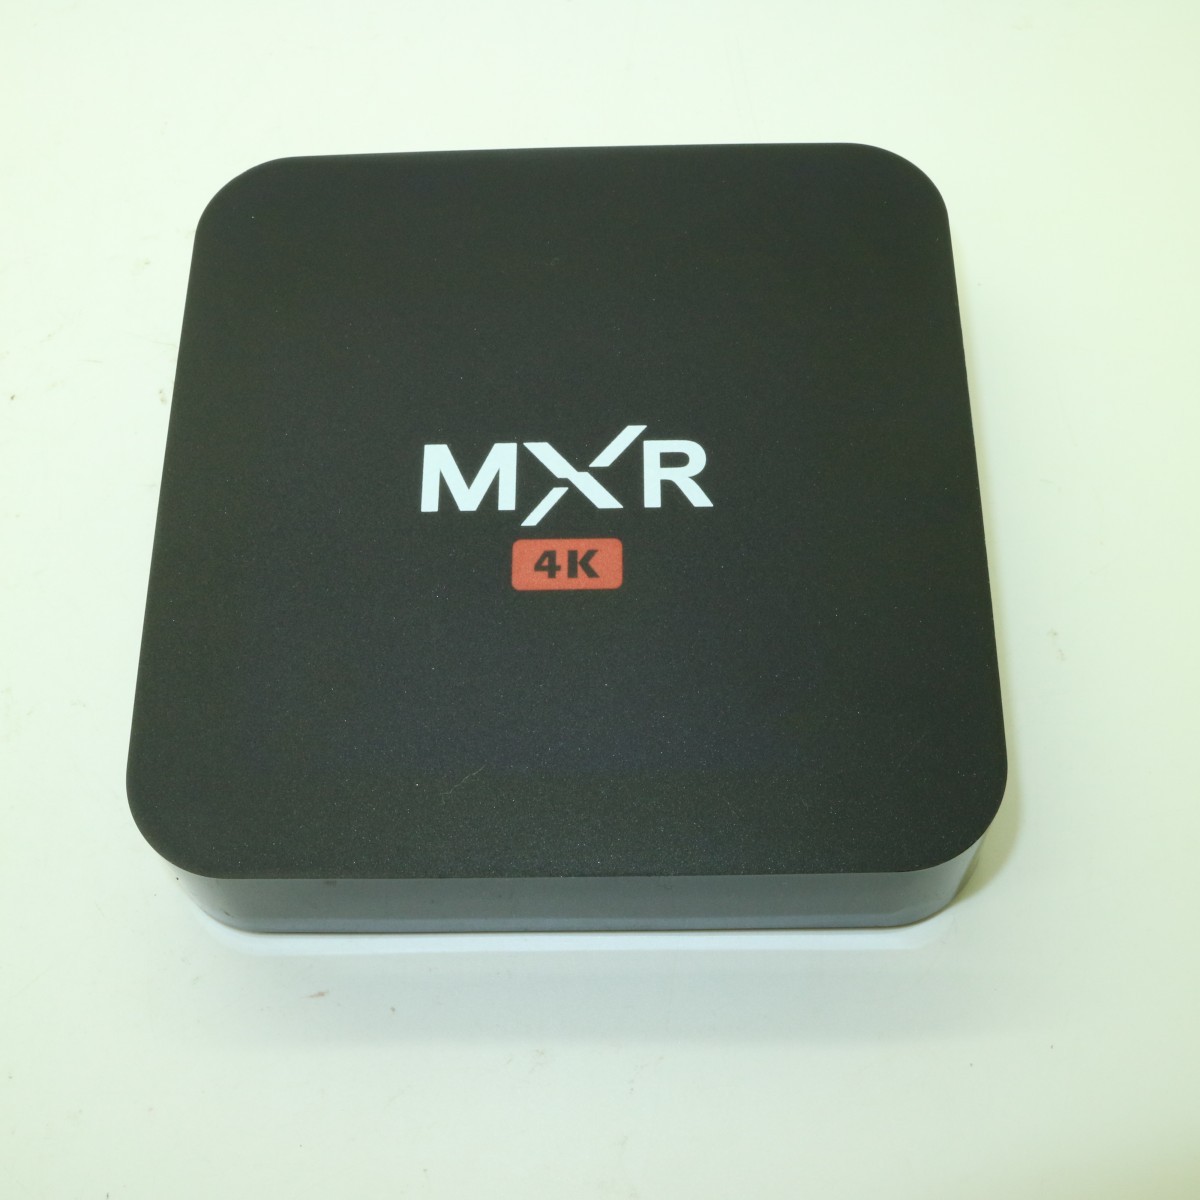 Voxlink RK3229 Mxr Android tv box Quad Core 1.5G (Cortex-A7) 1G/8G TV Box Support 4K*2K Multi-format Video Decode H.265 black EU